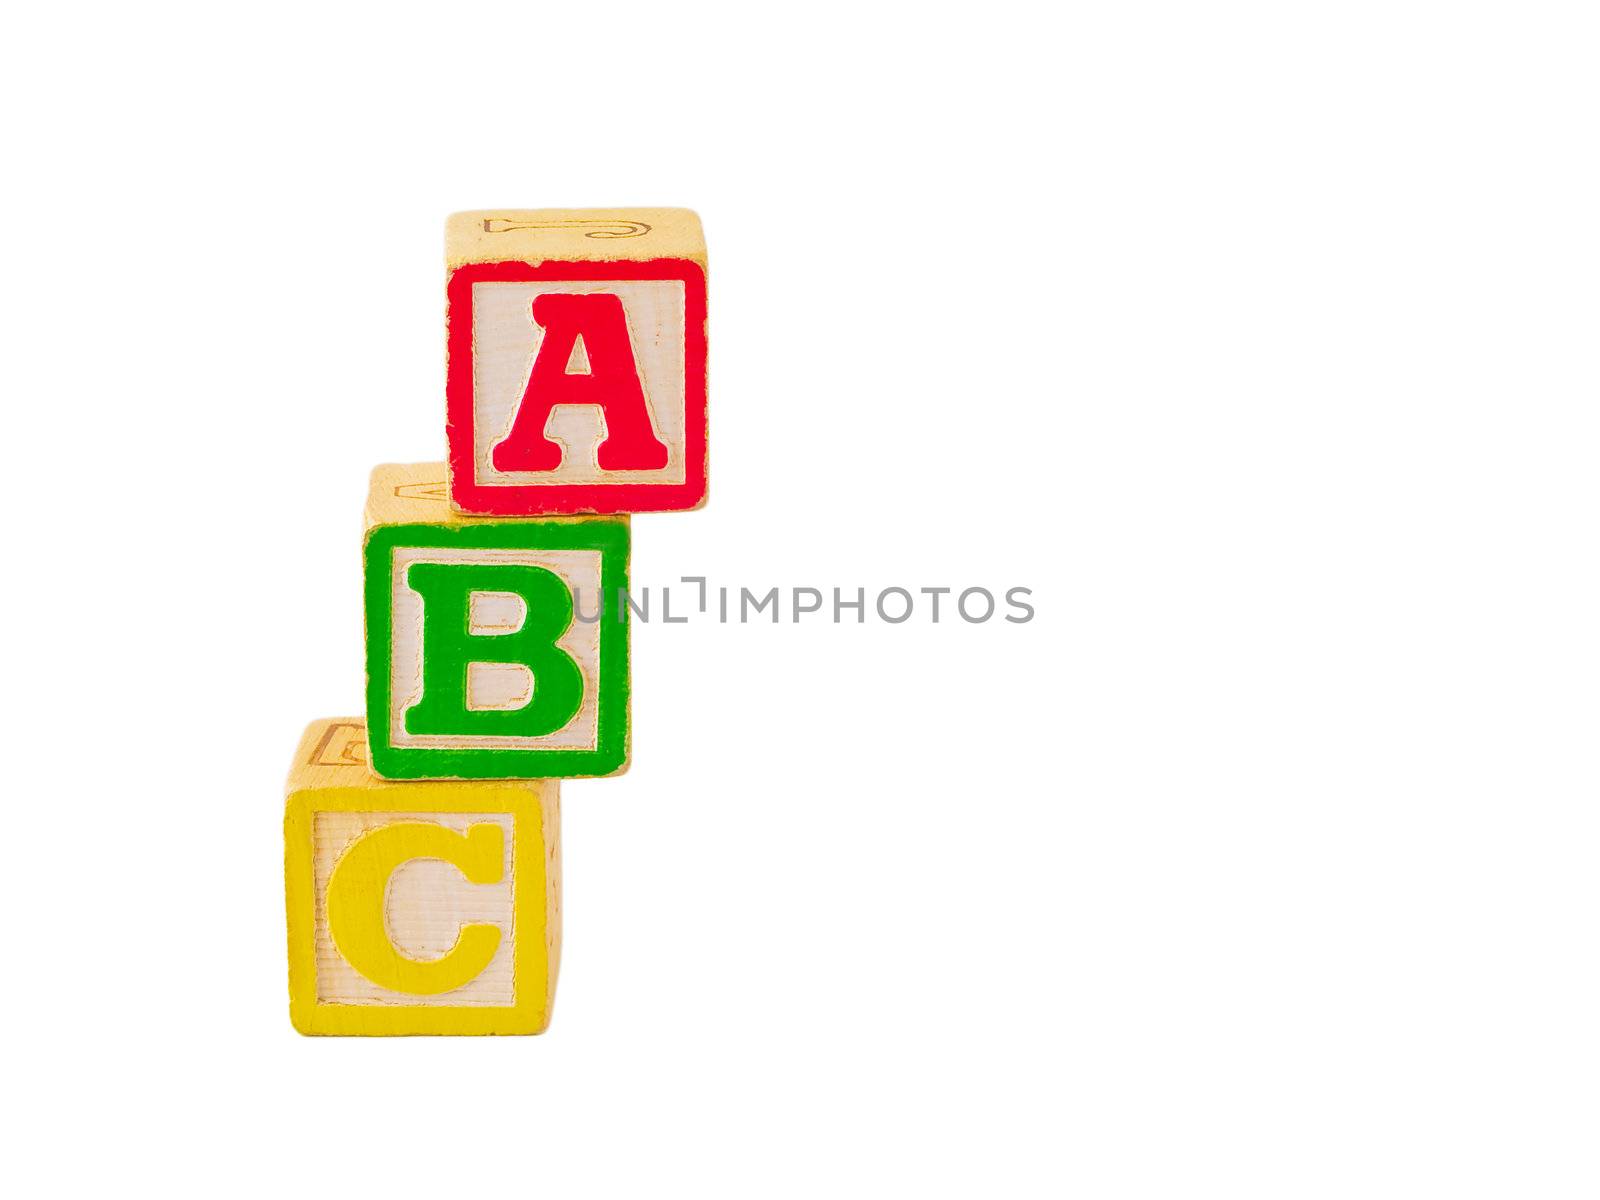 Alphabet Blocks Isolated on a White Background